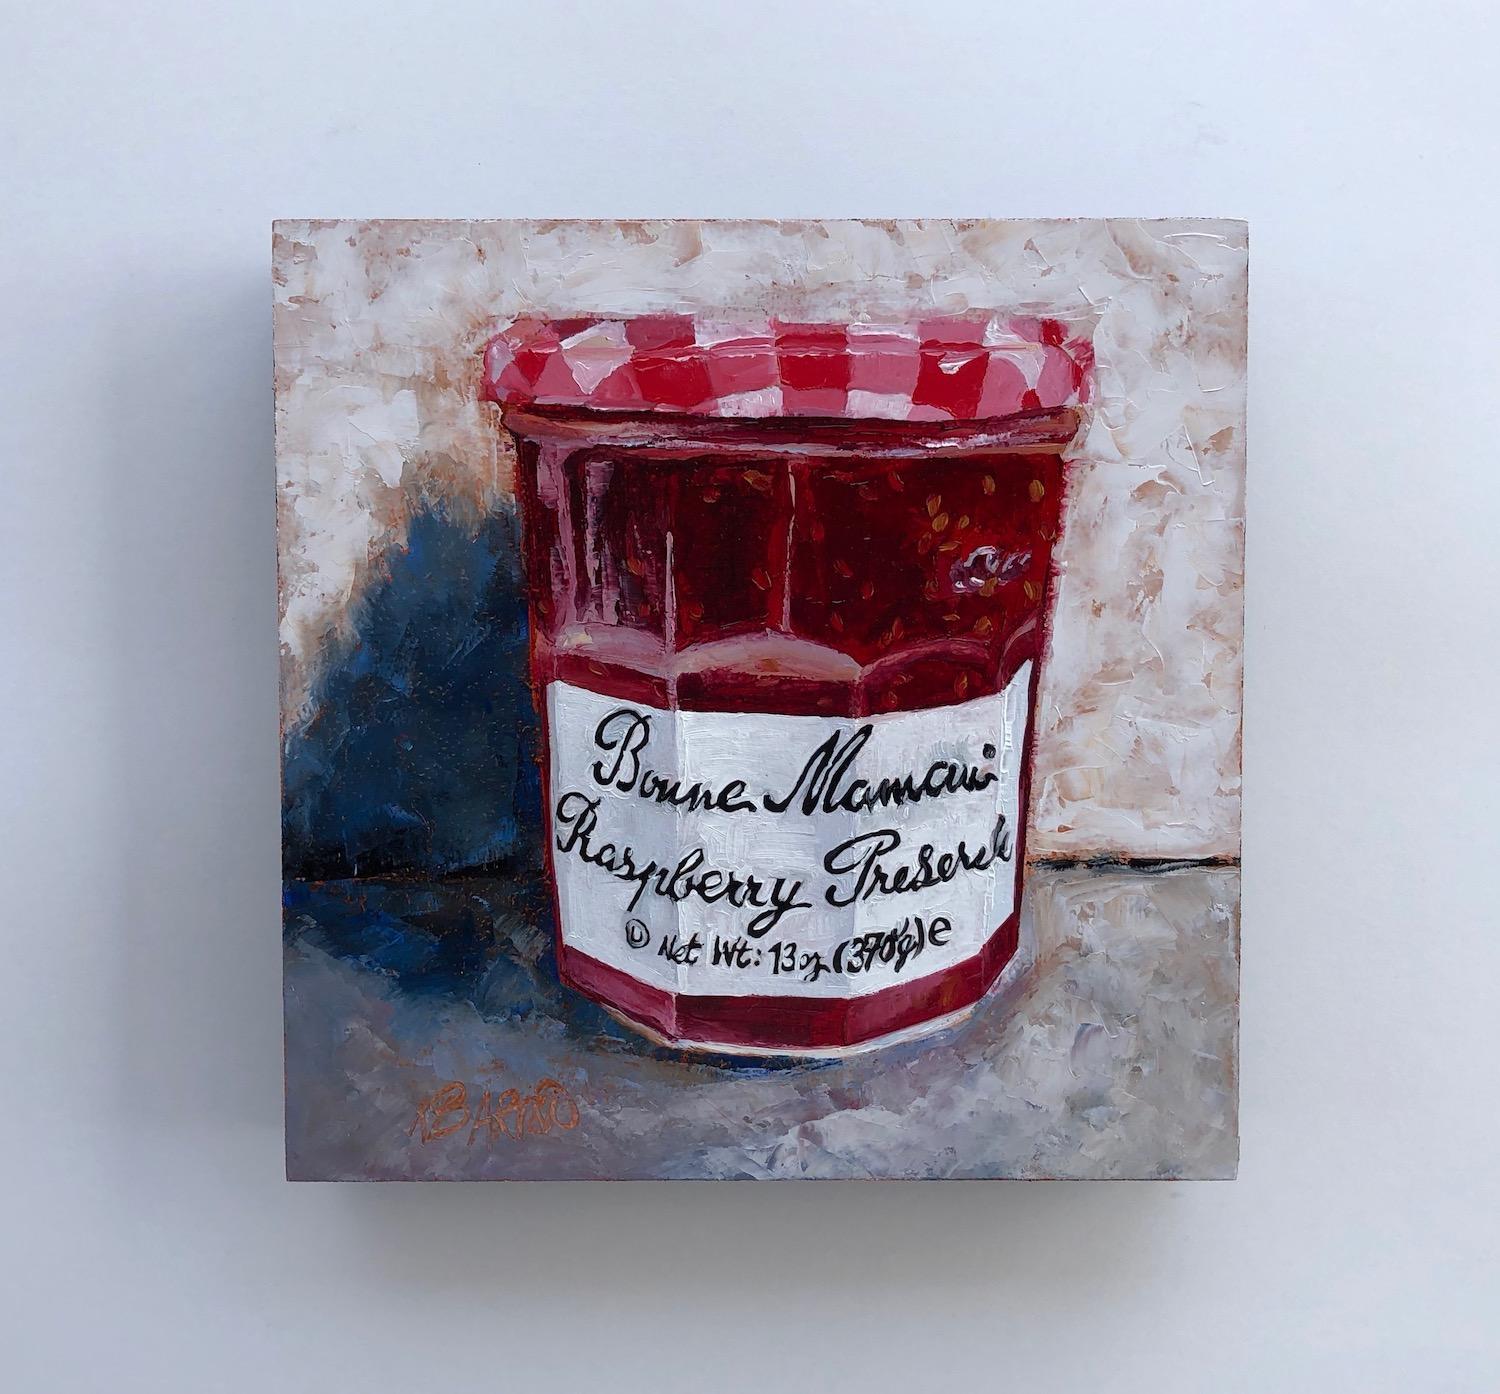 Bonne Maman Raspberry Preserves - Pop Art Painting by Karen Barton